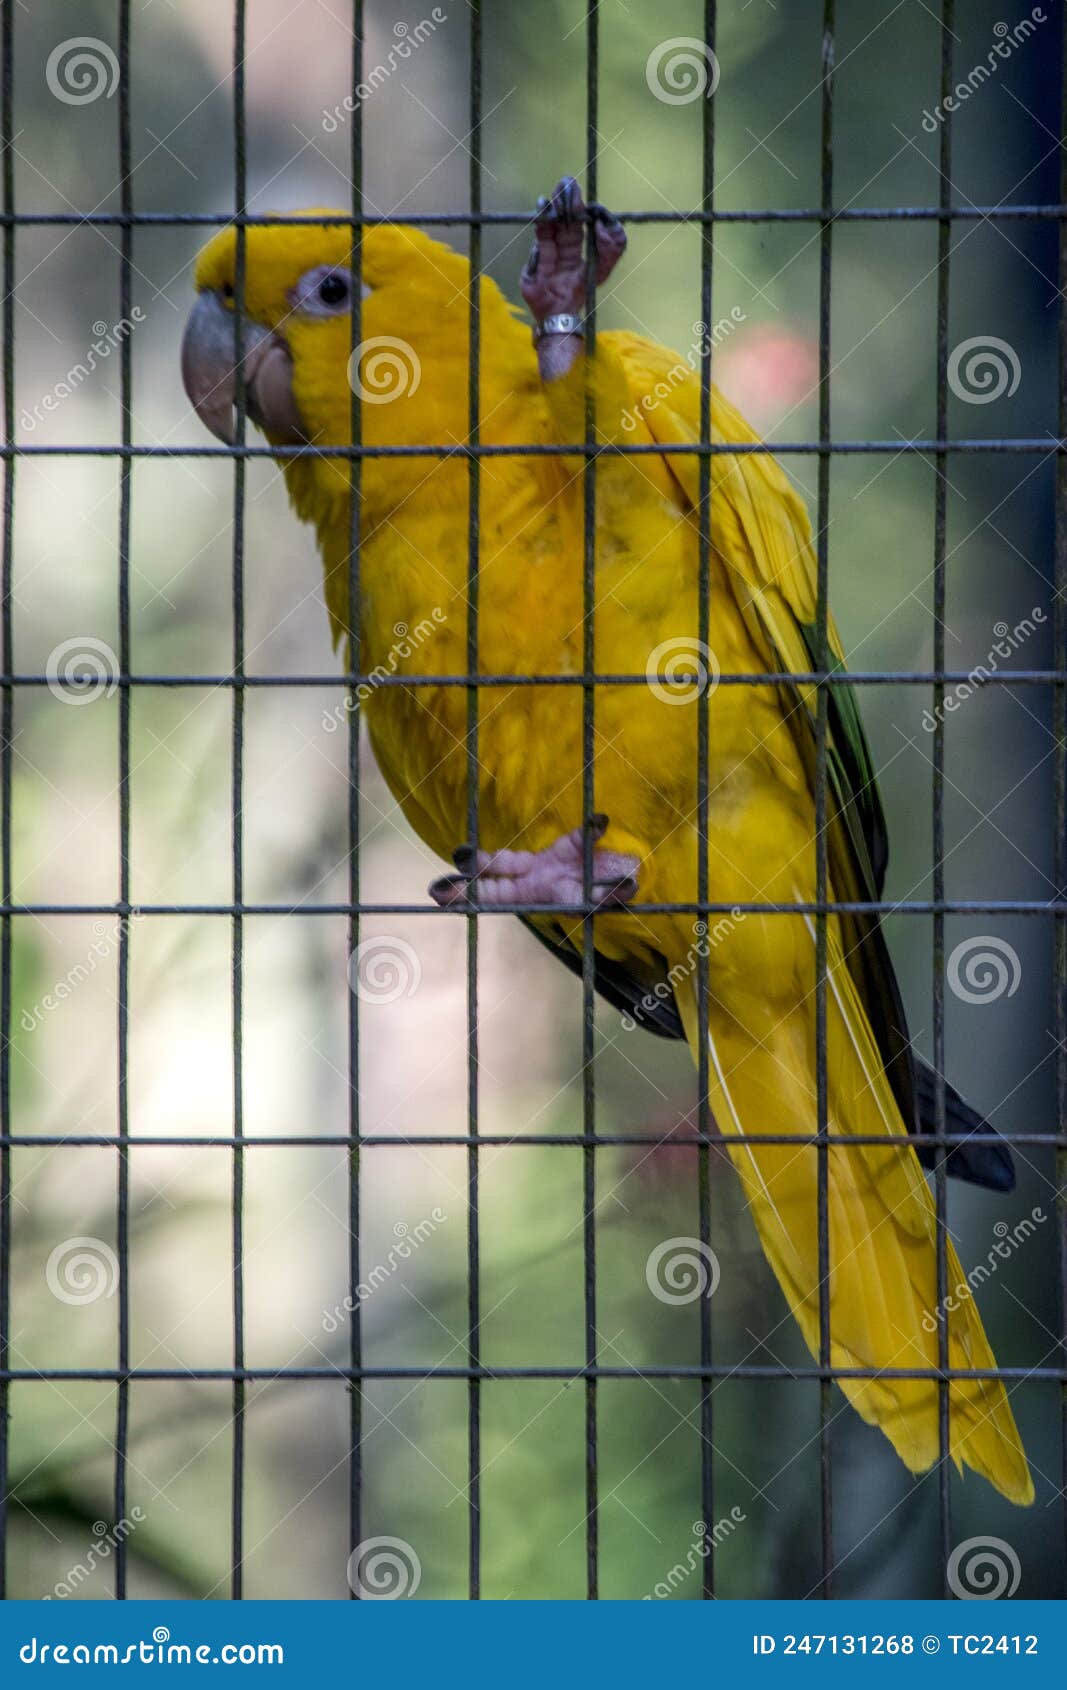 guacamayo guaruba, cotorra dorada, periquito amarillo o aratinga amarilla guaruba guaroubaÃ¢â¬â¹